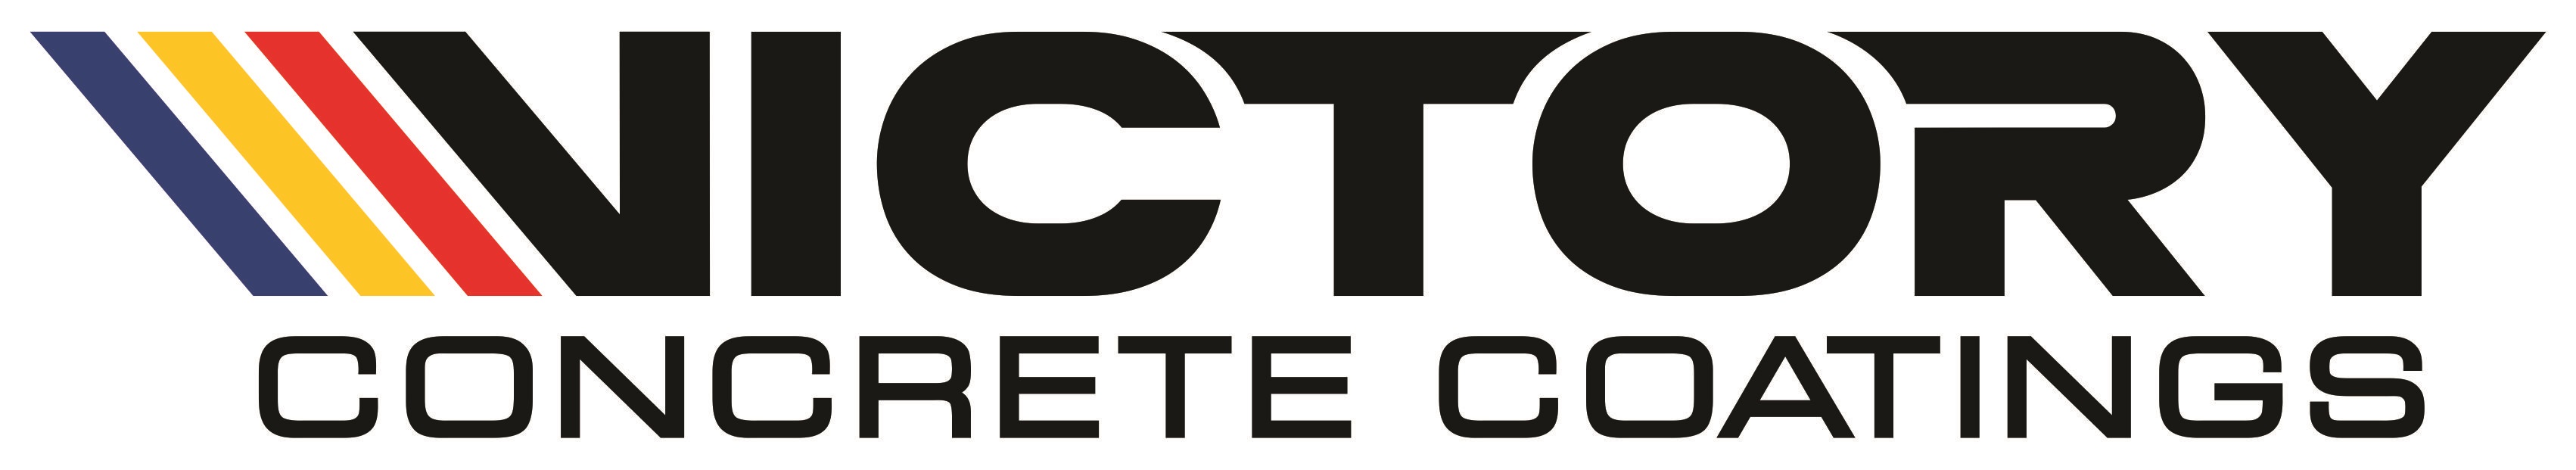 Victory Concrete Coatings Logo